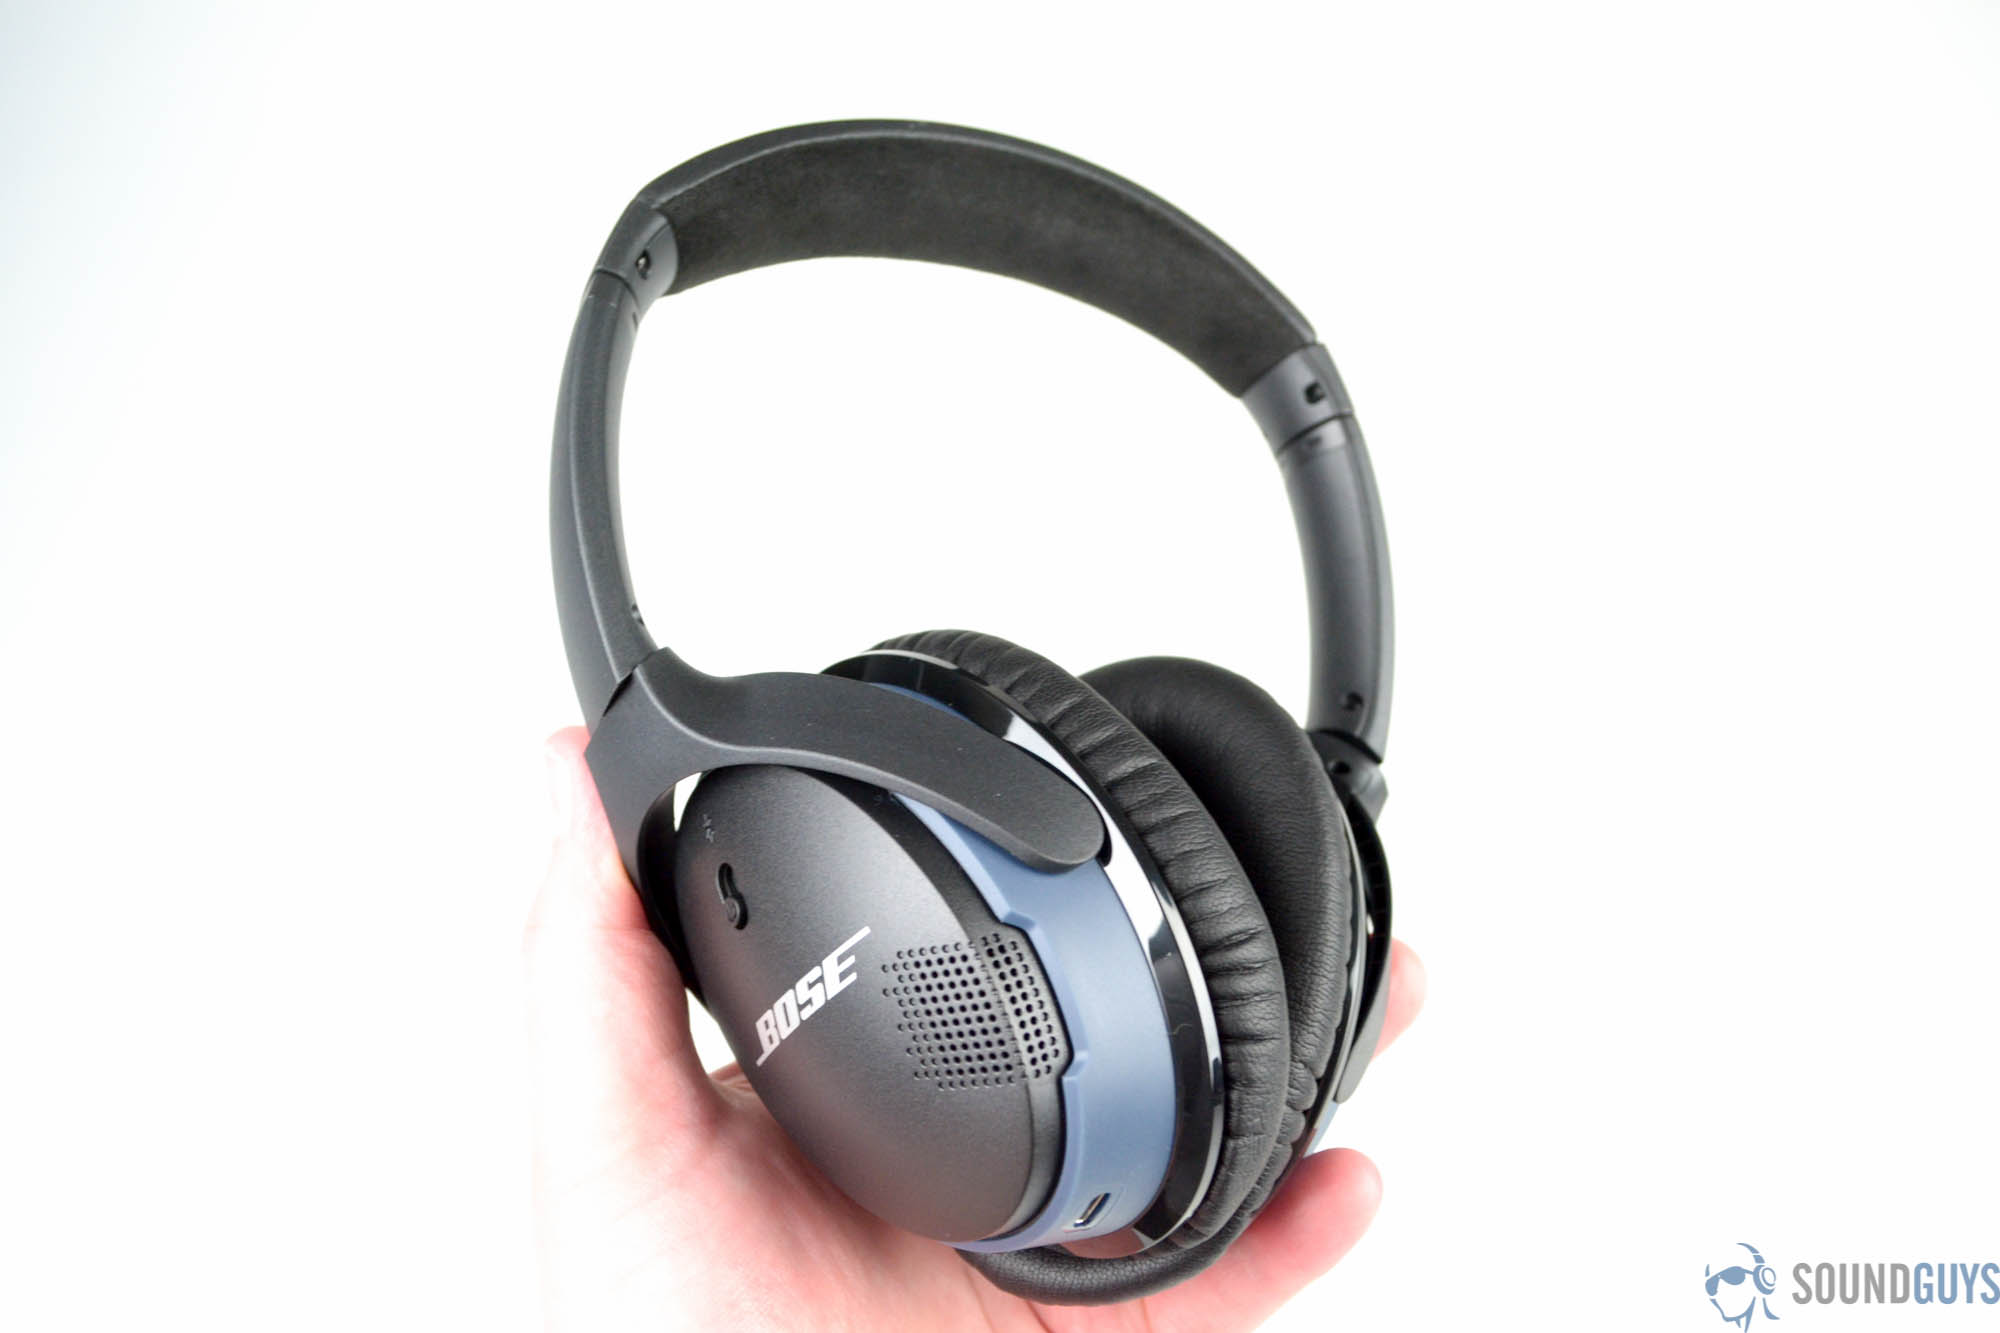 Bose SoundLink Around-Ear Wireless Headphones II review: A very